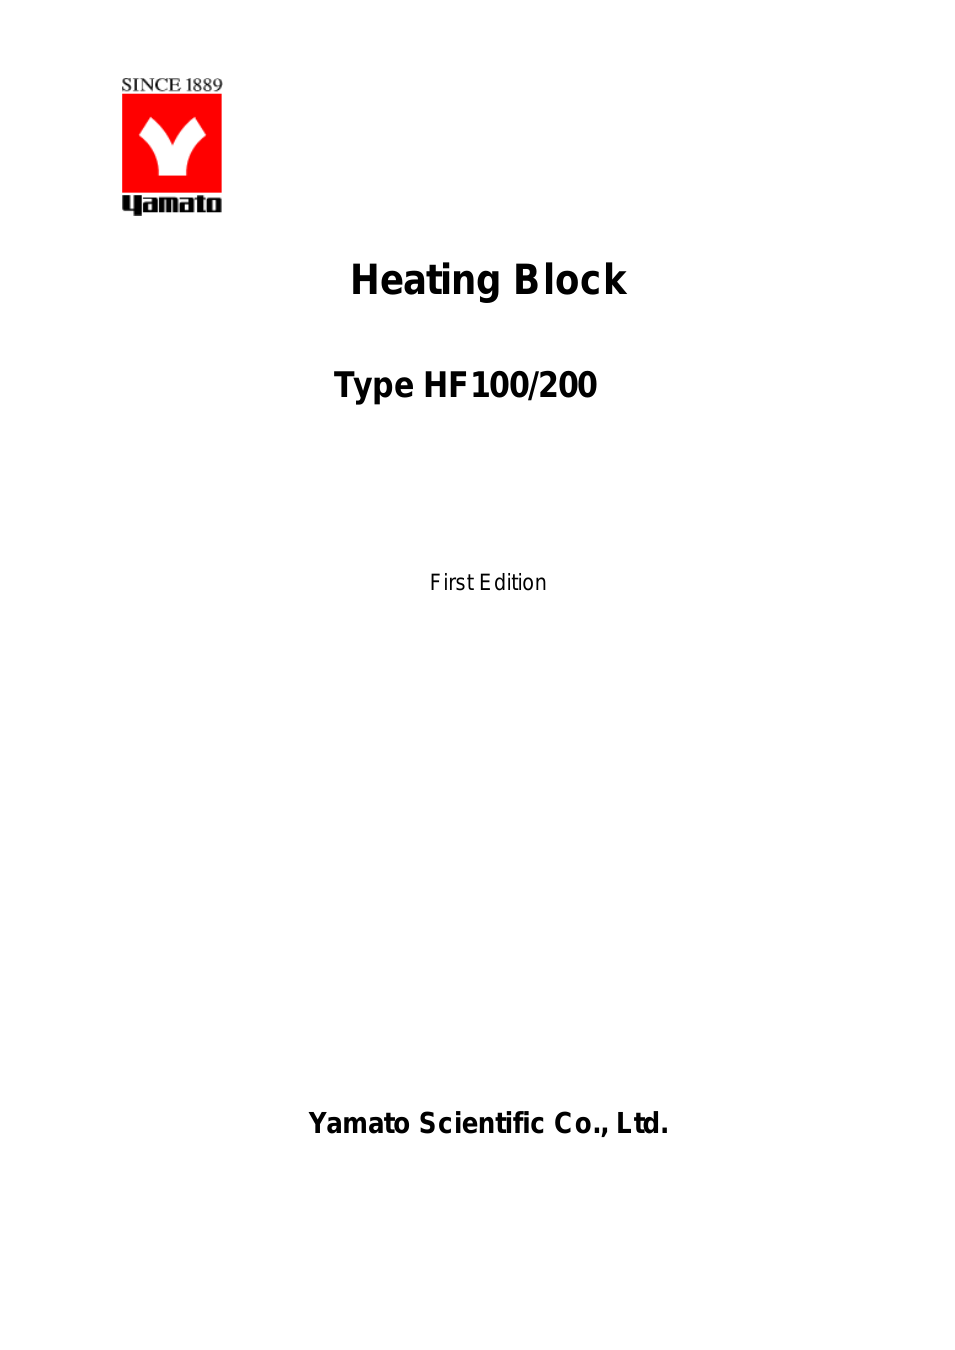 HF200 Heating Block